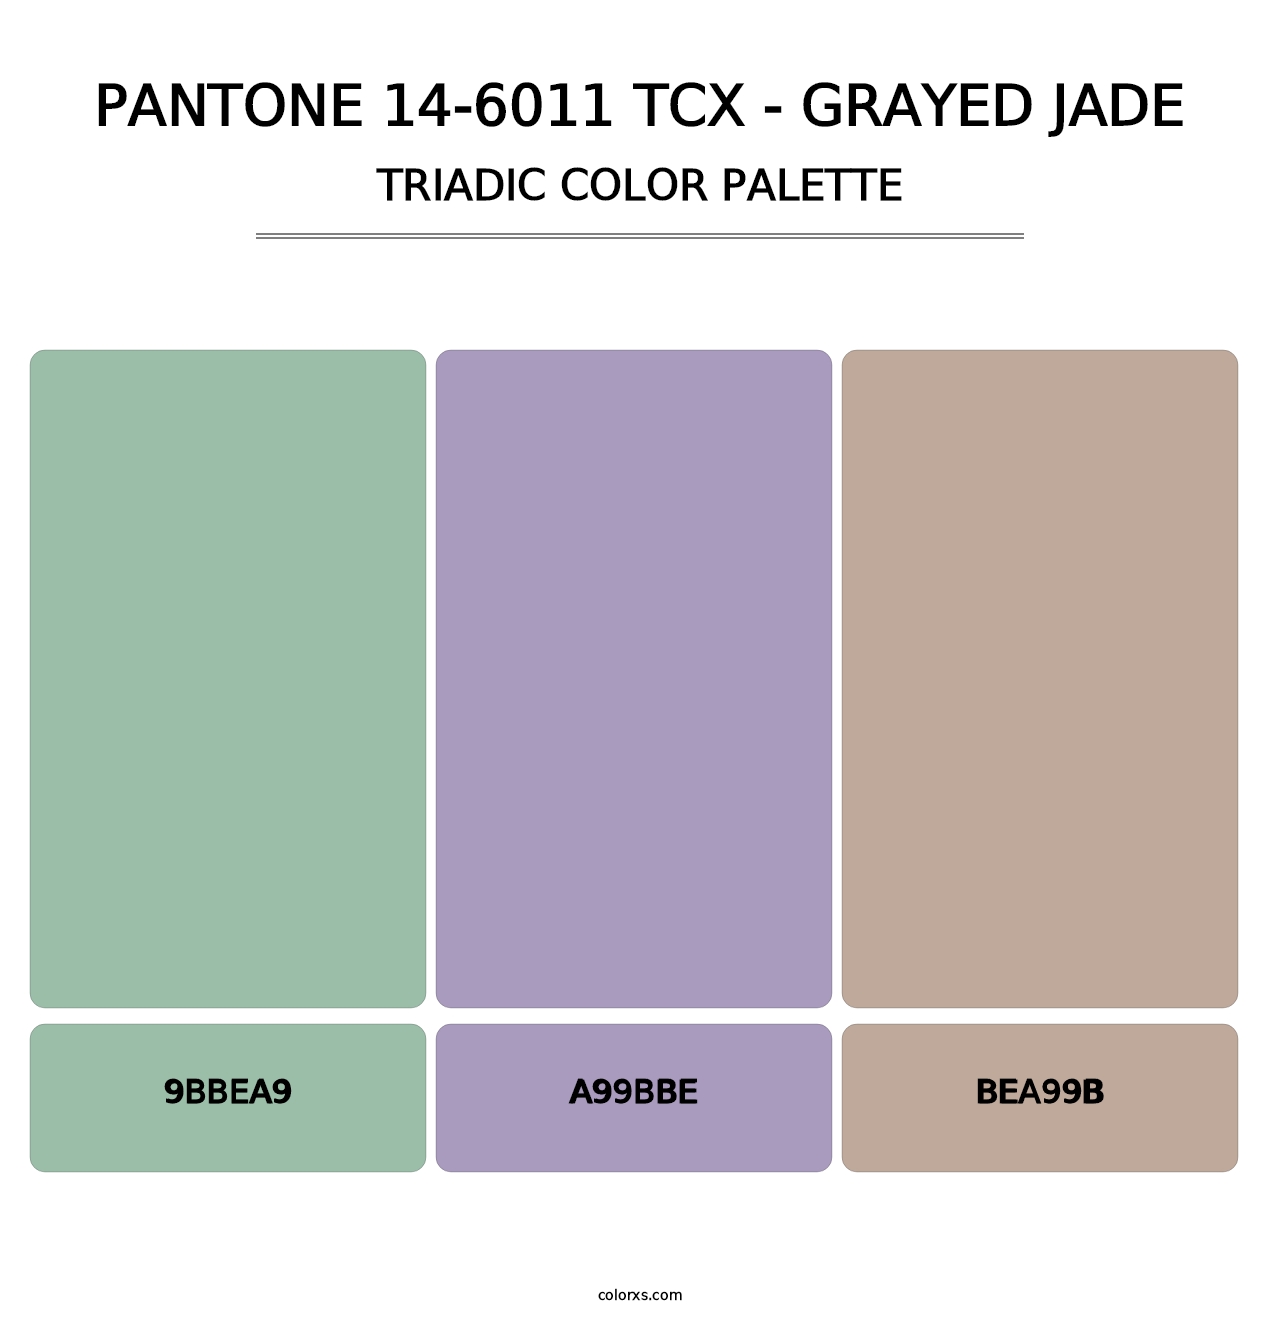 PANTONE 14-6011 TCX - Grayed Jade - Triadic Color Palette